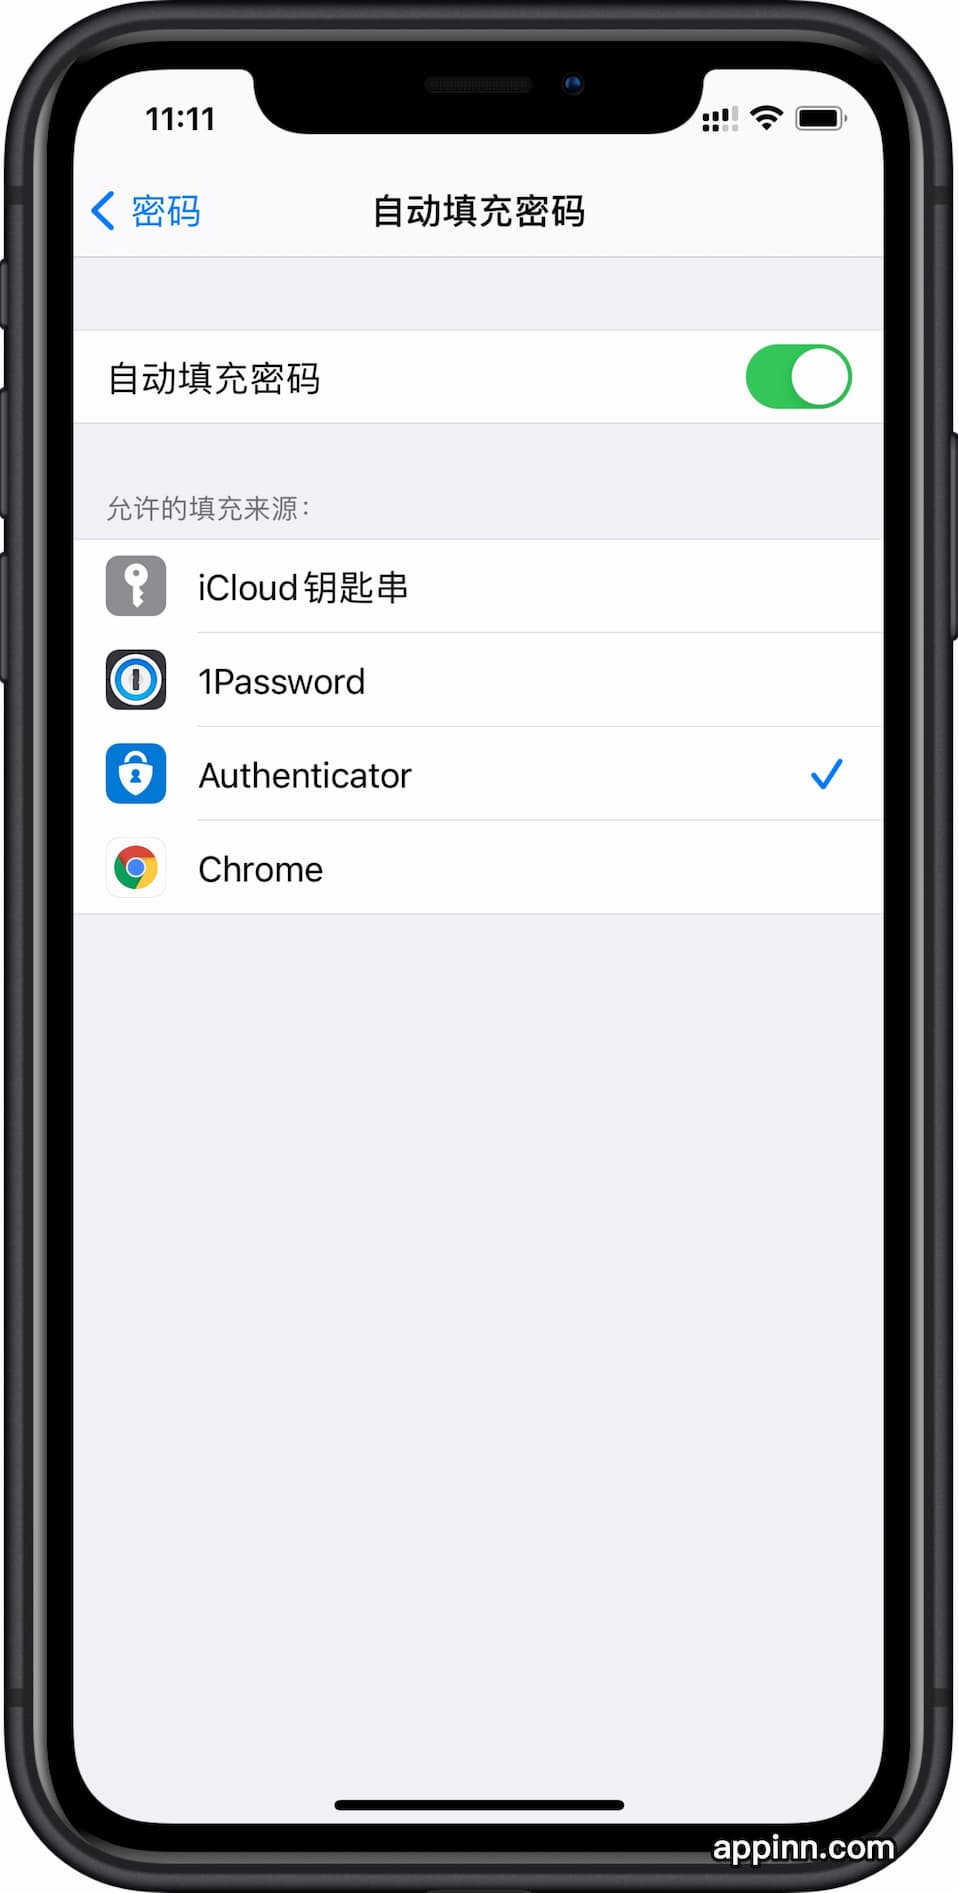 Microsoft Authenticator 密码管理器 - 从 Edge 同步密码，支持在 iPhone、Android 设备及 Chrome 中自动填充密码 3